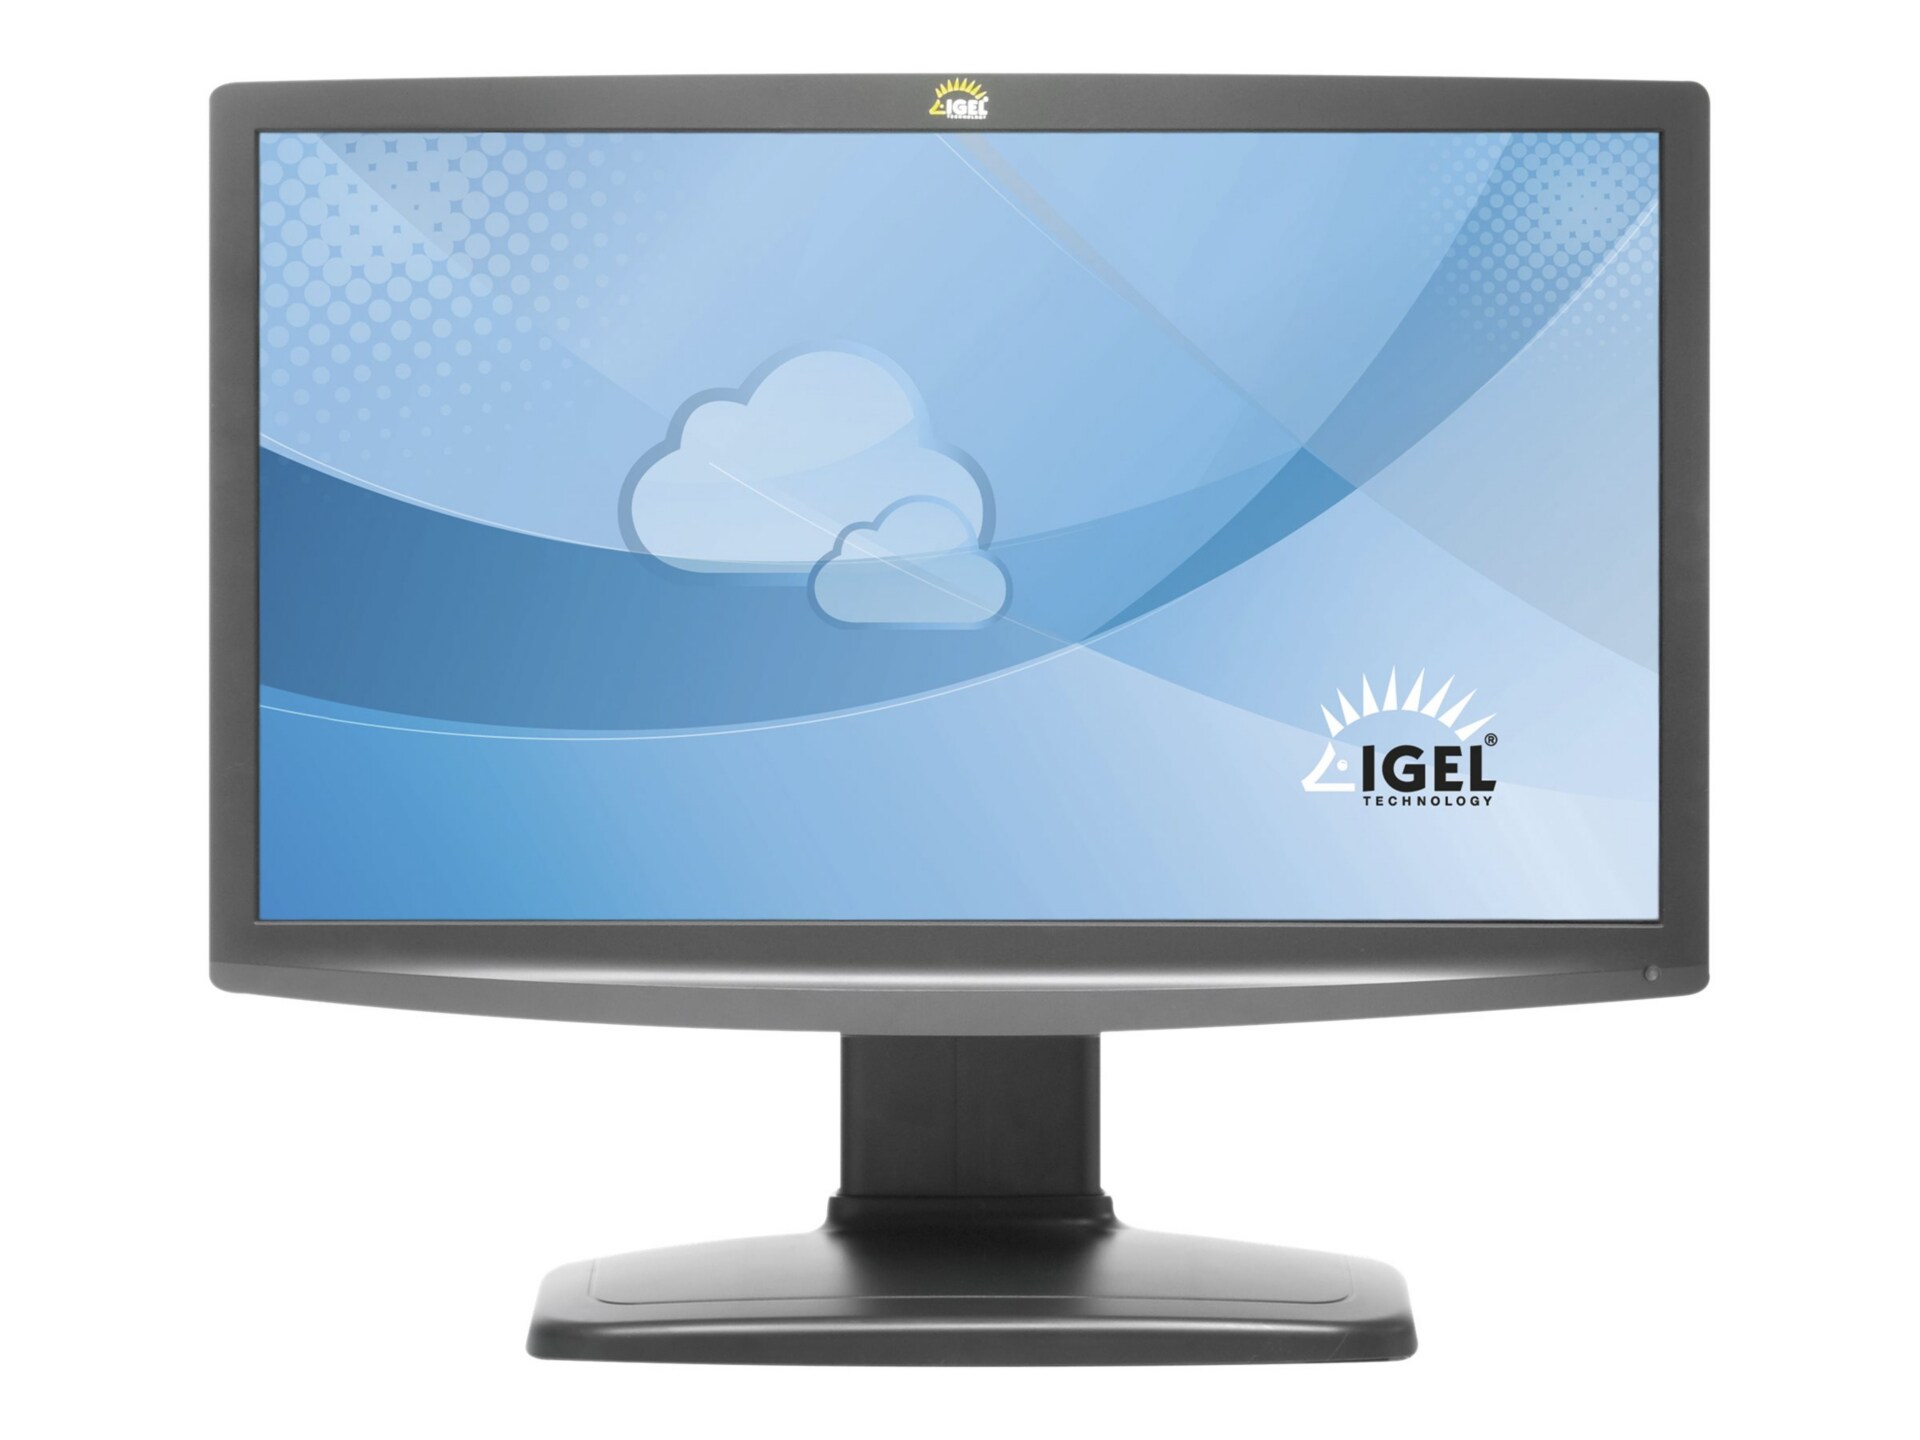 IGEL Universal Desktop UD9 - all-in-one - Celeron J1900 1.99 GHz - 2 GB - 4 GB - LCD 21.5"